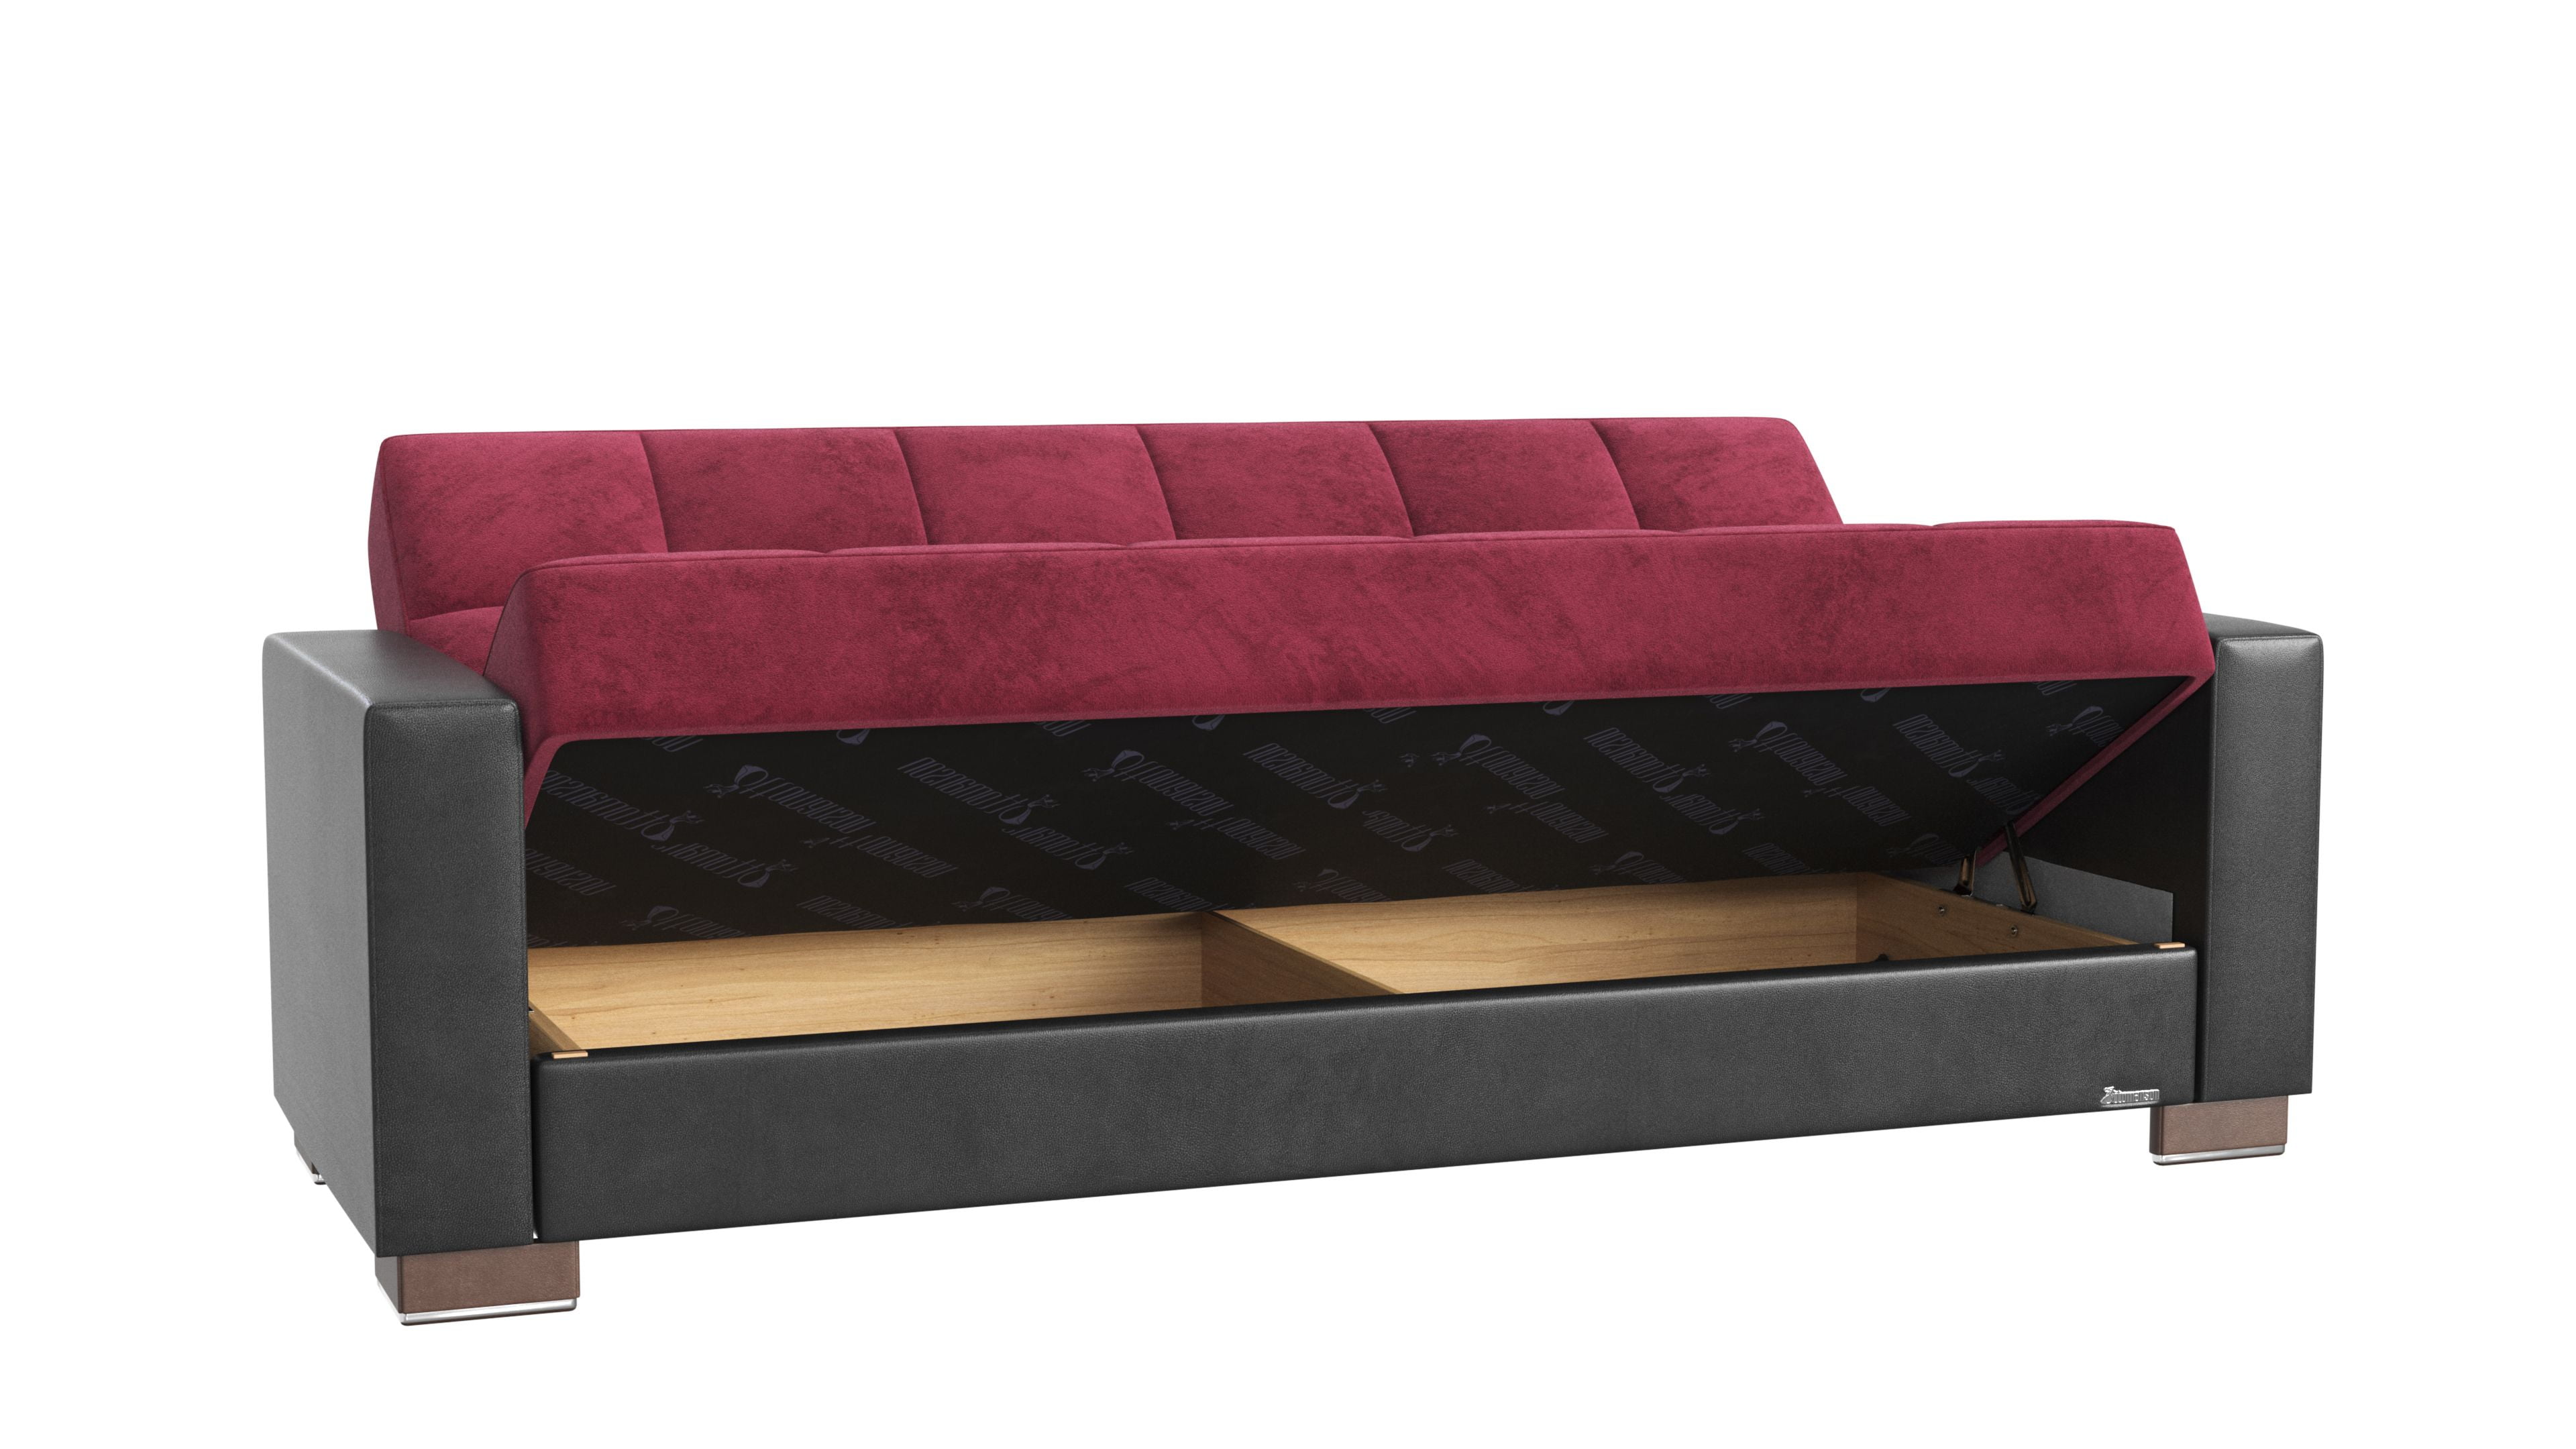 HomCom Click Clack Couch Convertible Sleeper Sofa Bed Futon Linen